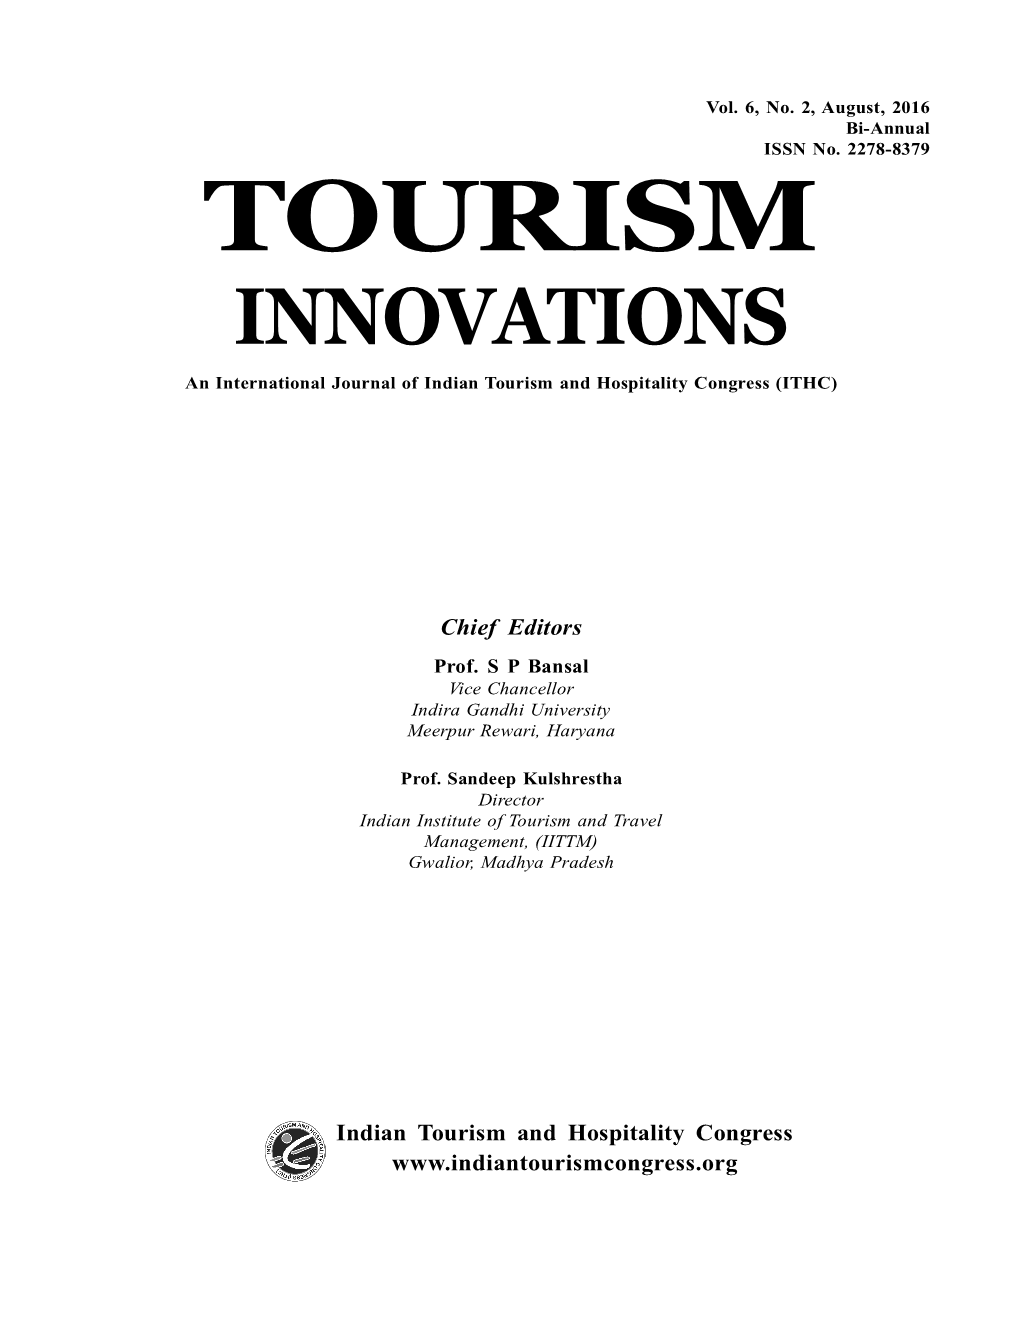 Tourism Innovations Vol 6 N2 (2016)